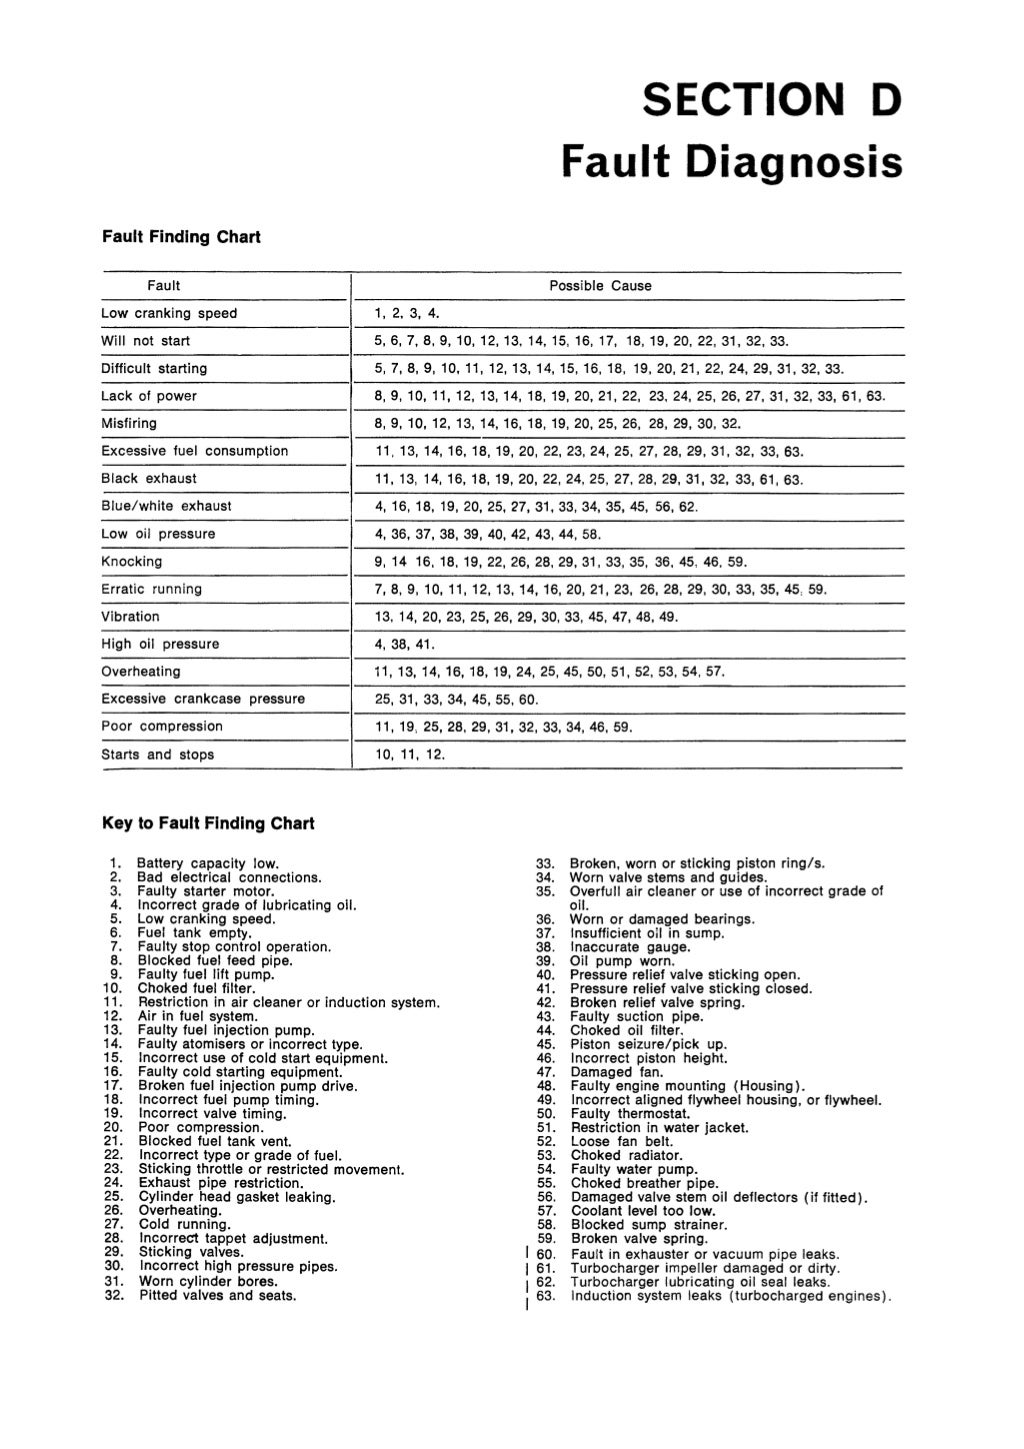 PERKINS 4.212 DIESEL ENGINE Service Repair Manual